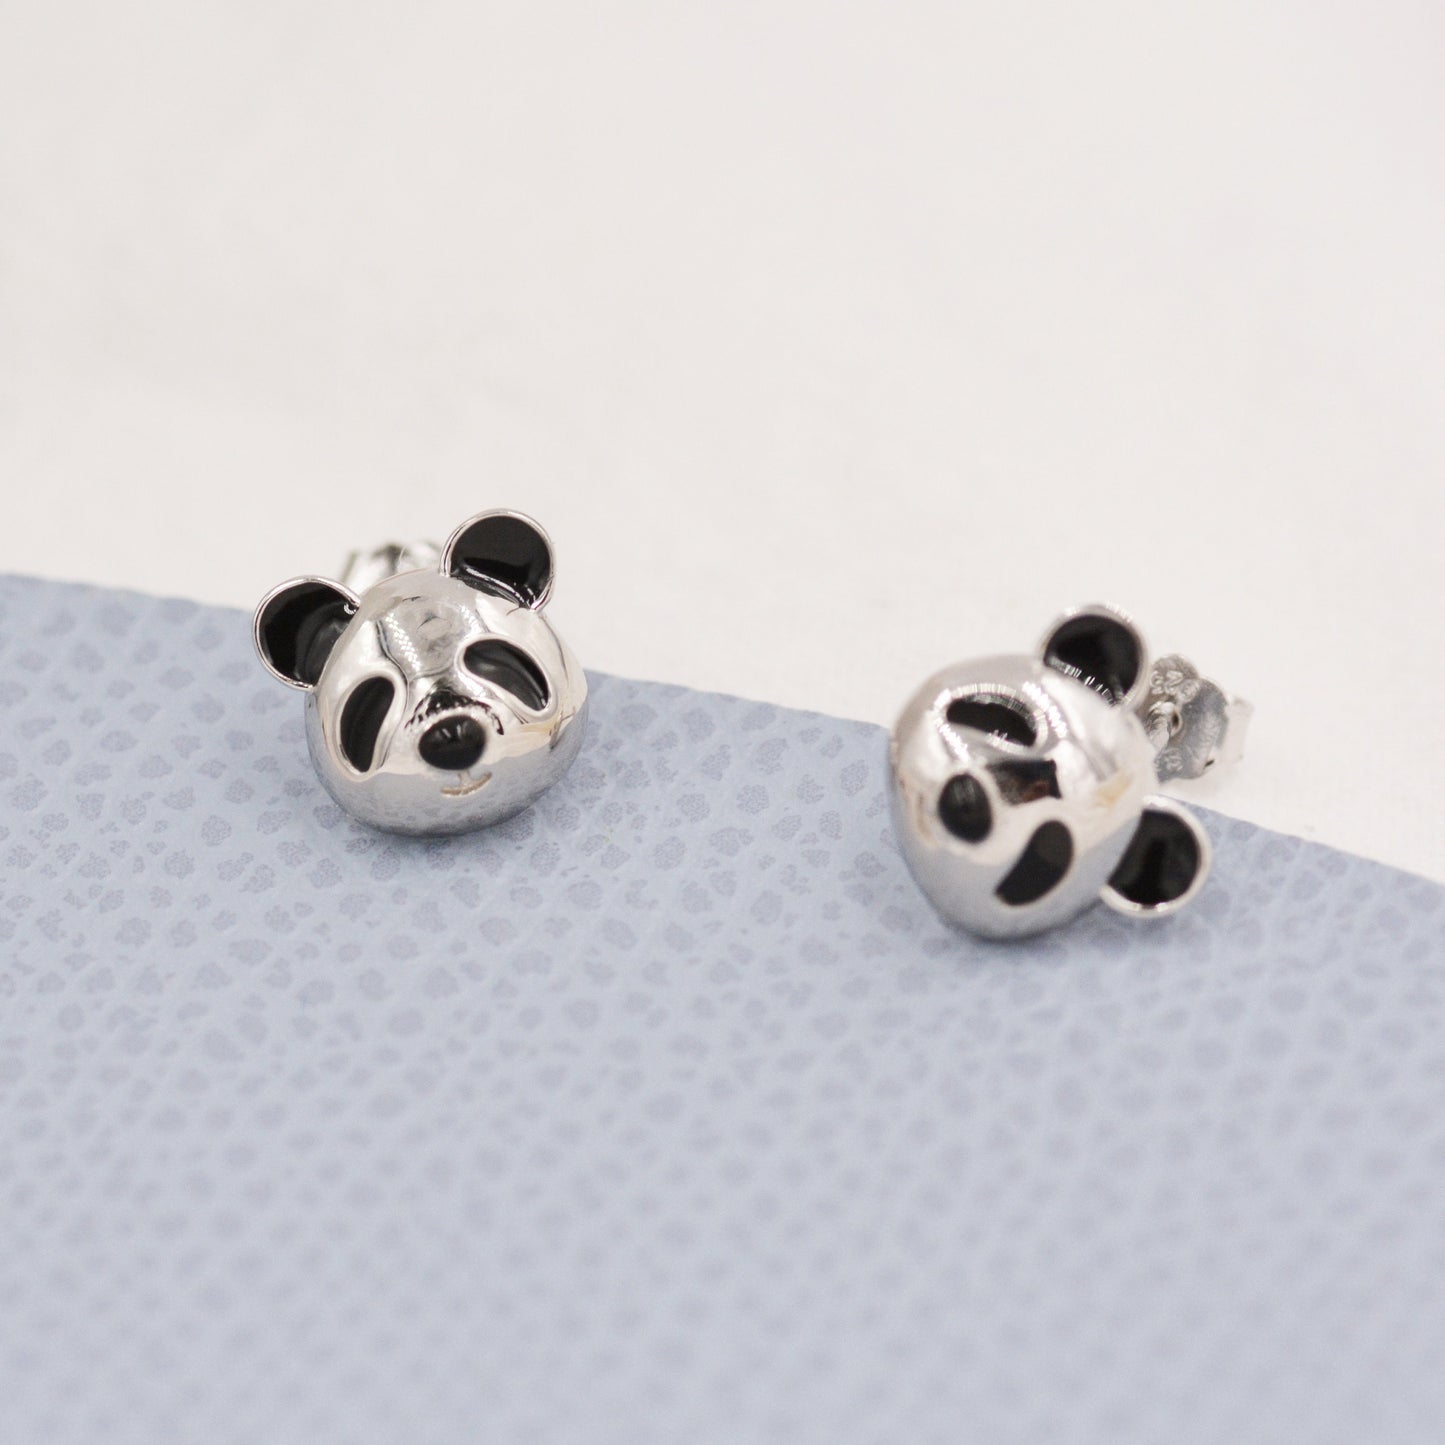 Cute Panda Earrings in Sterling Silver, Panda Bear Stud Earrings, Animal Earrings, Nature Lover